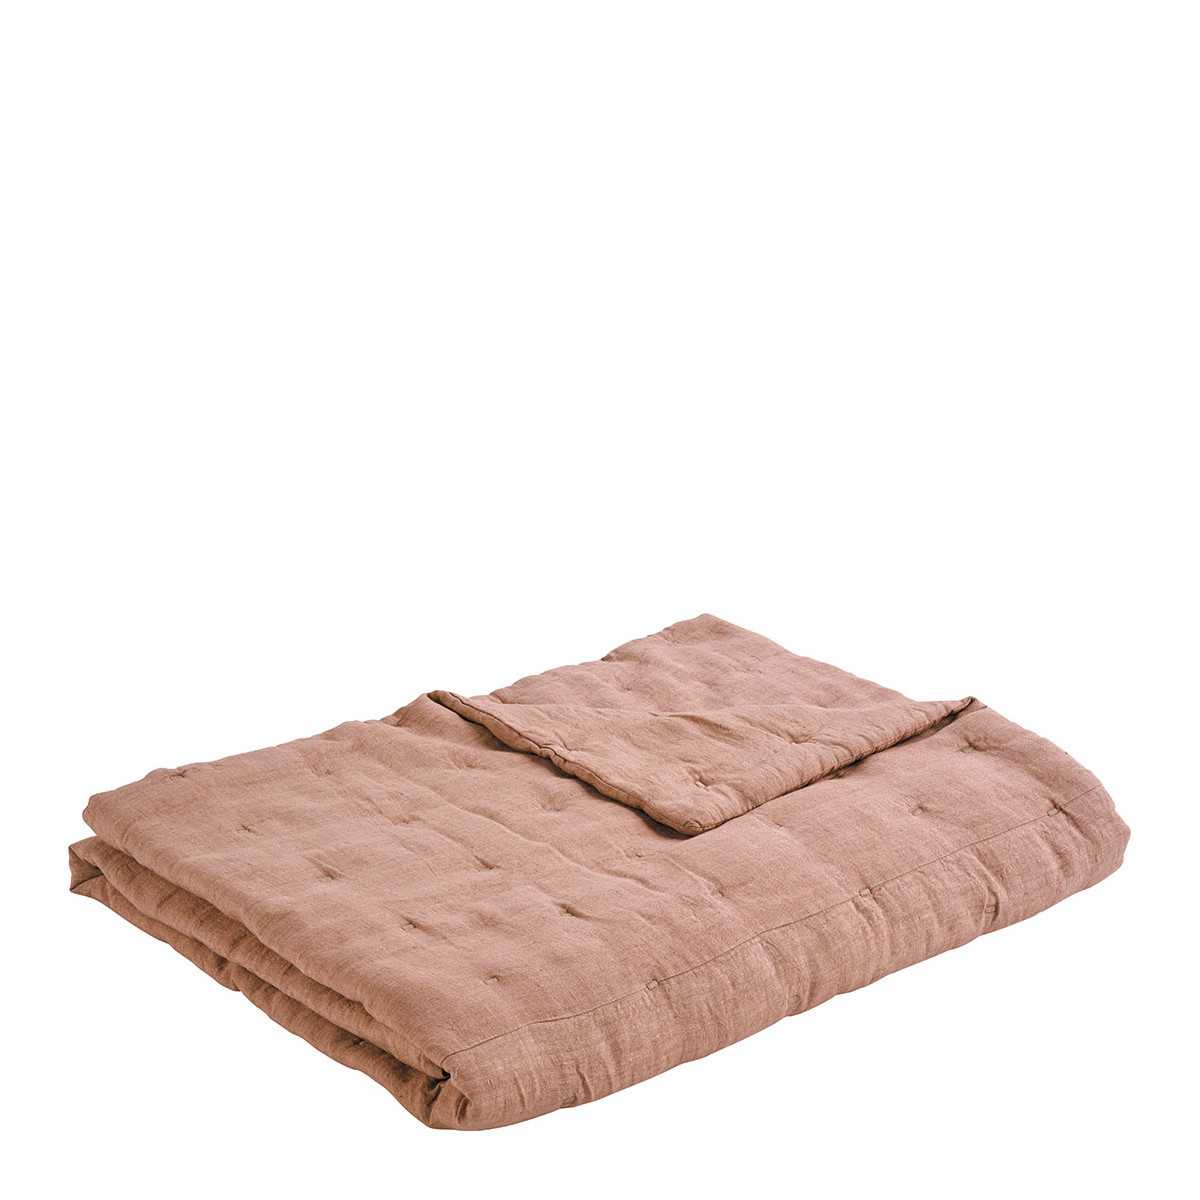 INTERIEUR- DECORATION|CHLOE bedspread in washed linen - Blush - 230 x 180 cmBLANC D'IVOIREBedspread